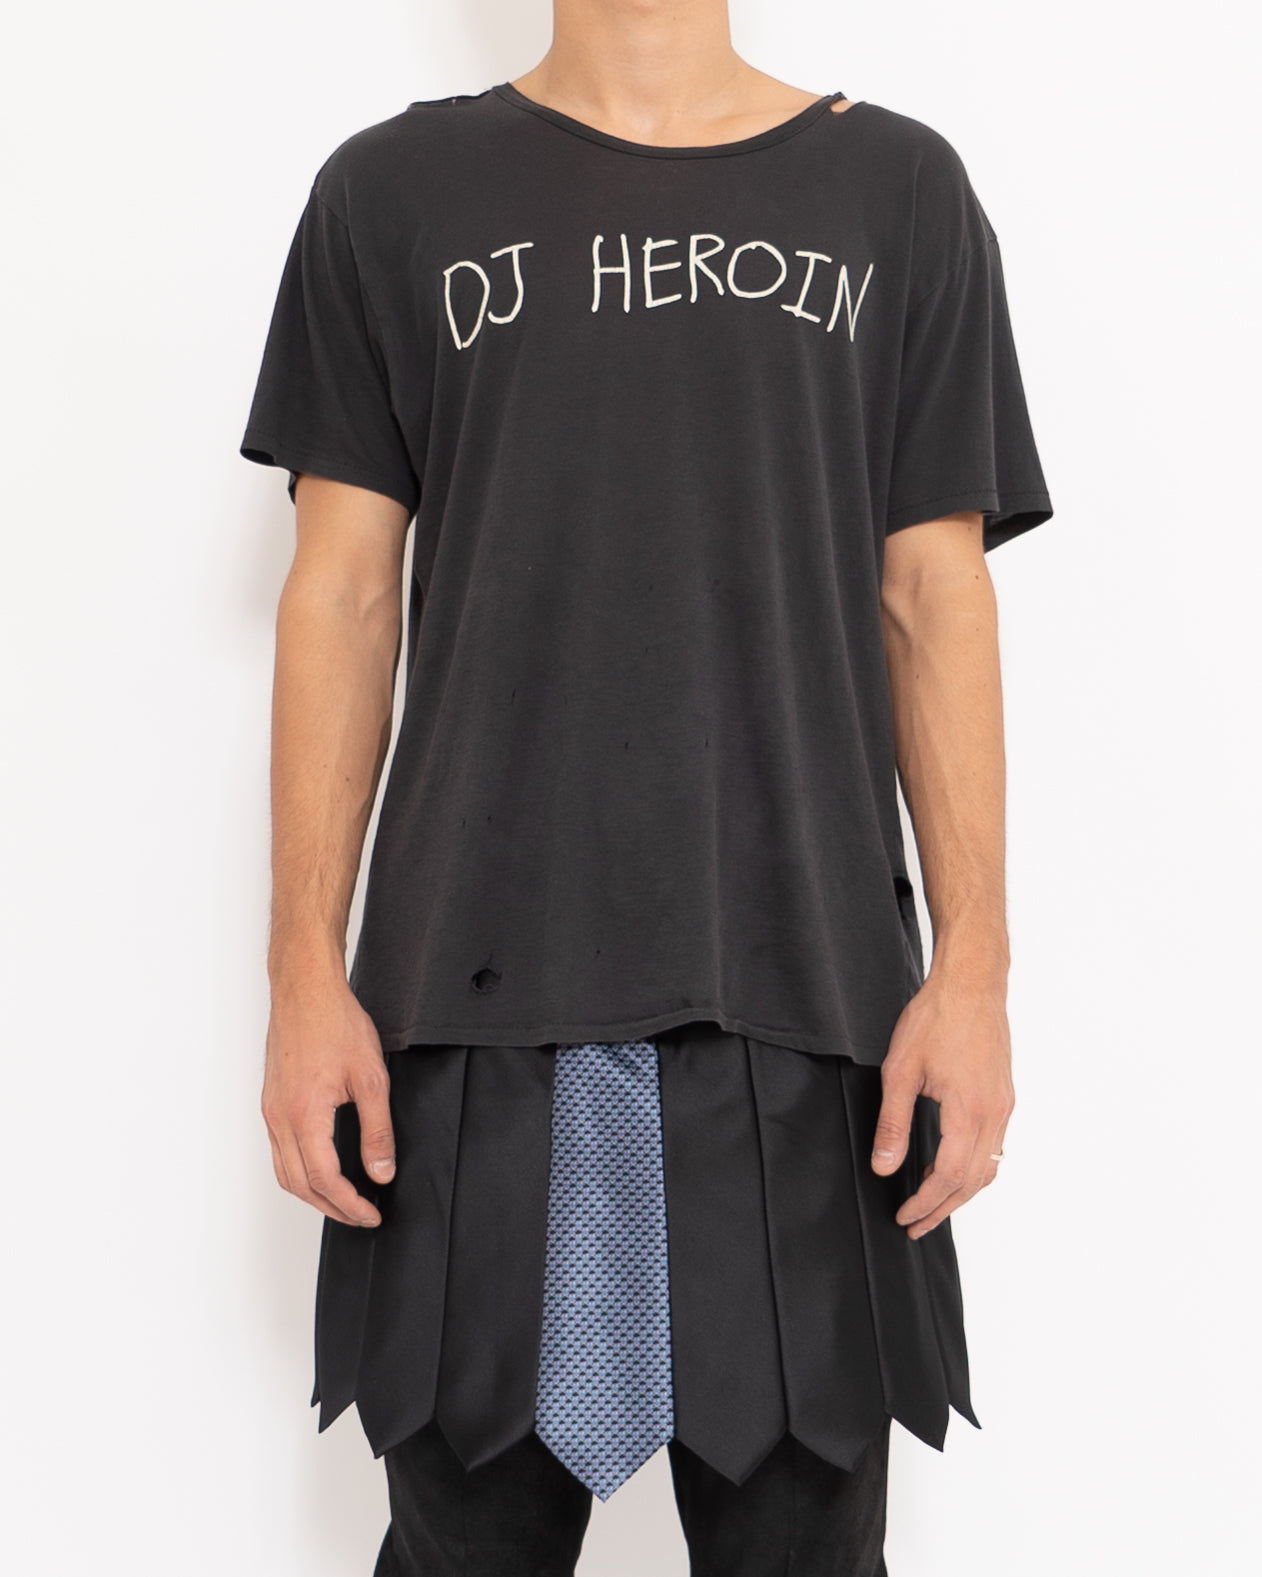 SS14 DJ Heroin Sample T-Shirt